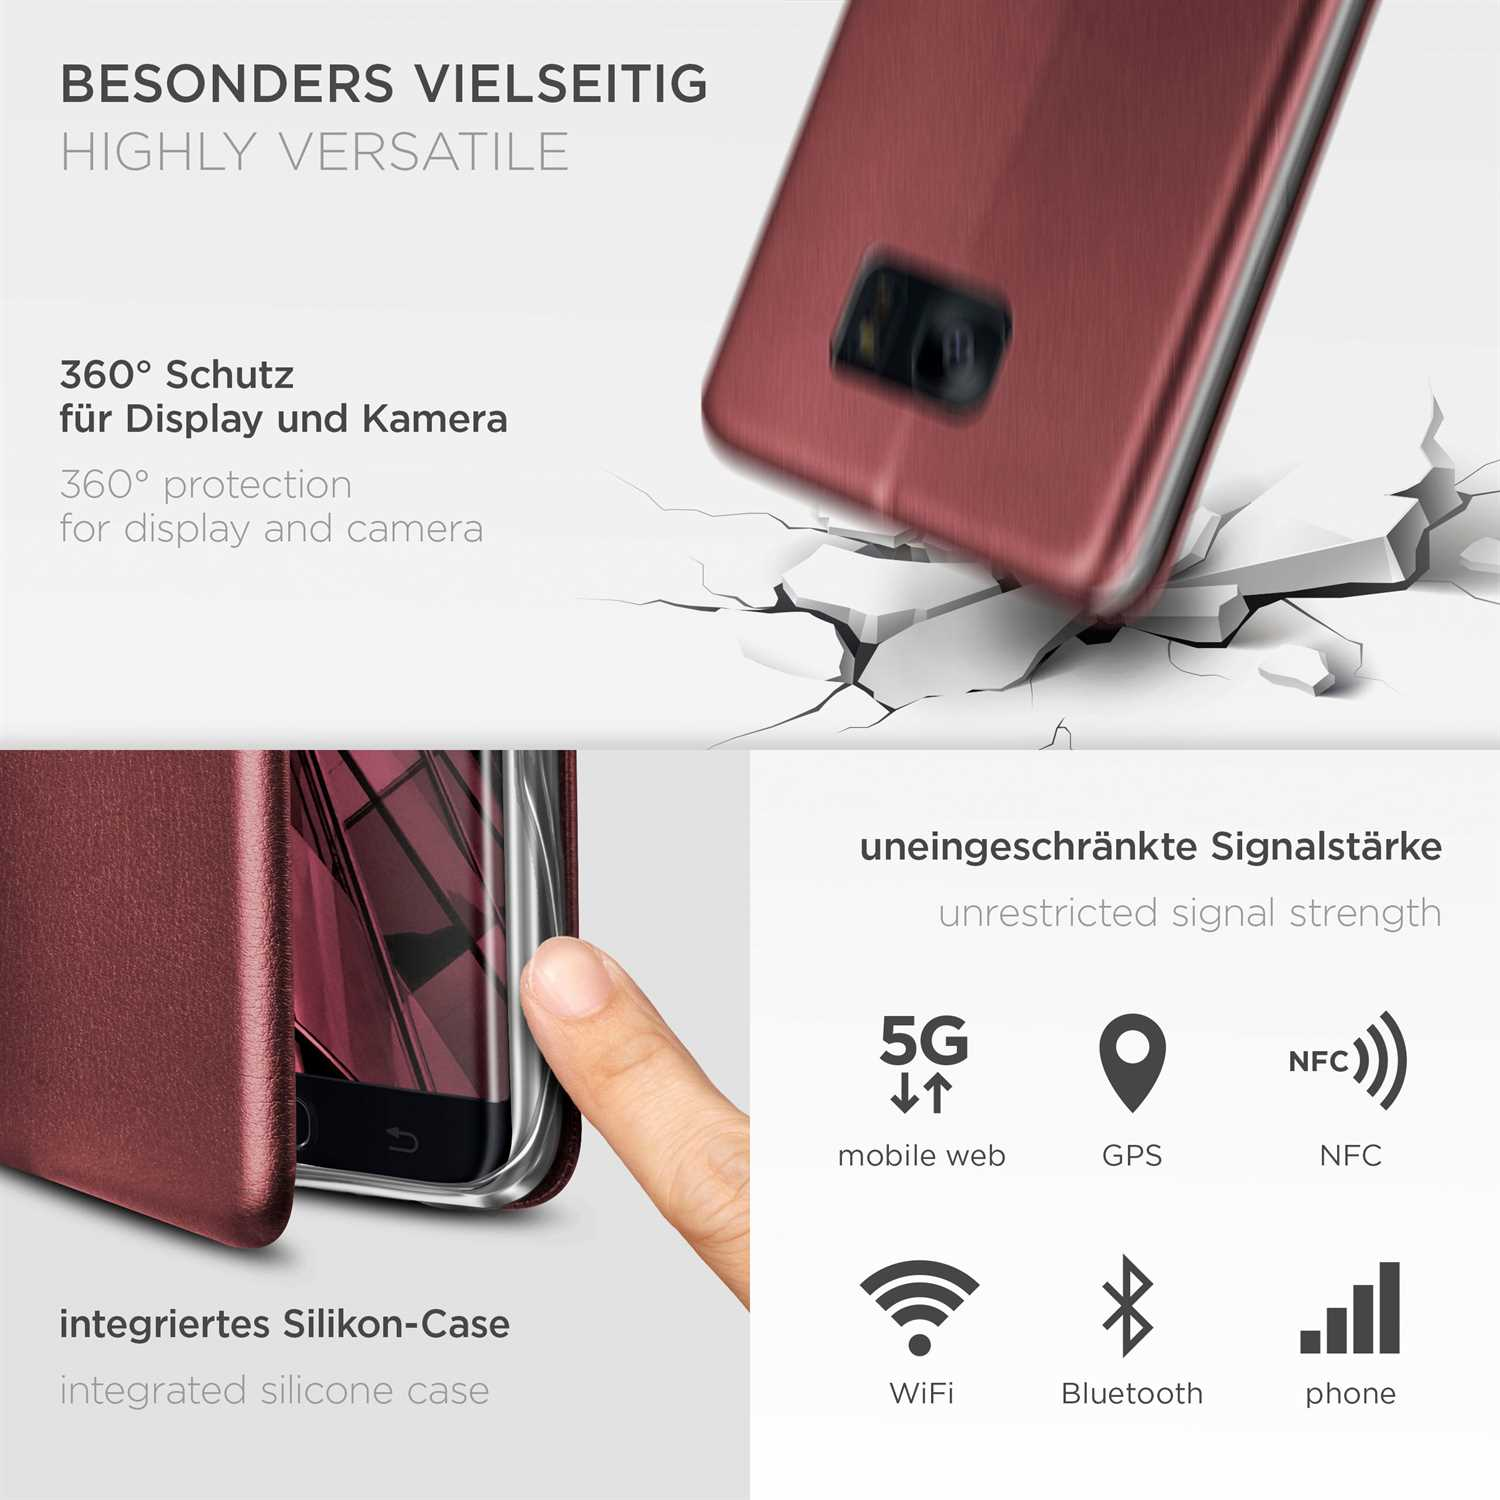 Galaxy Edge, Flip Red S7 Burgund - Case, ONEFLOW Business Samsung, Cover,